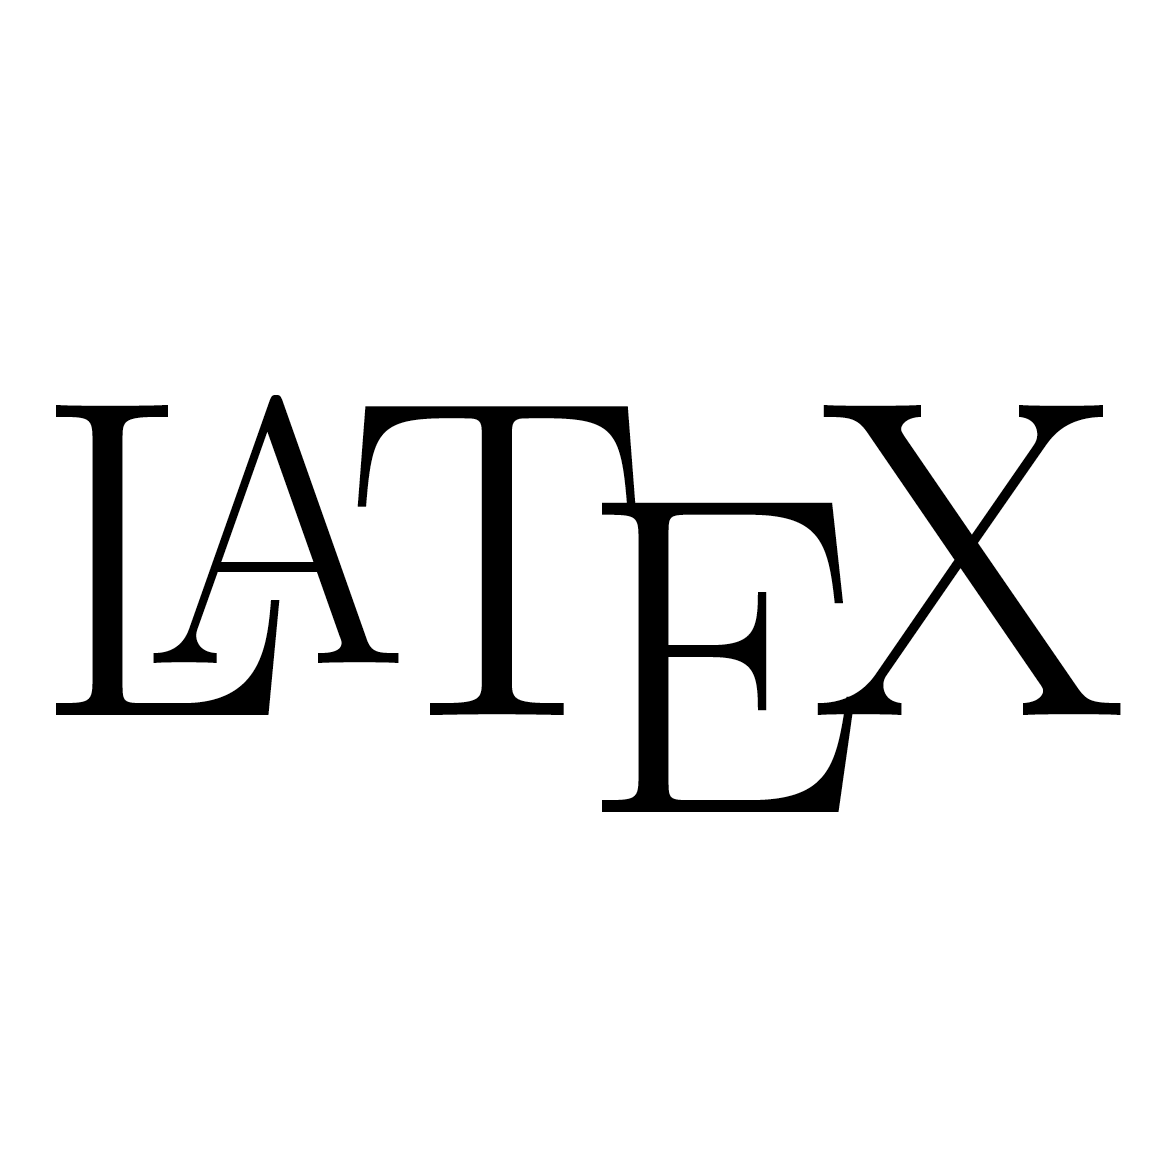 LaTeX Logo